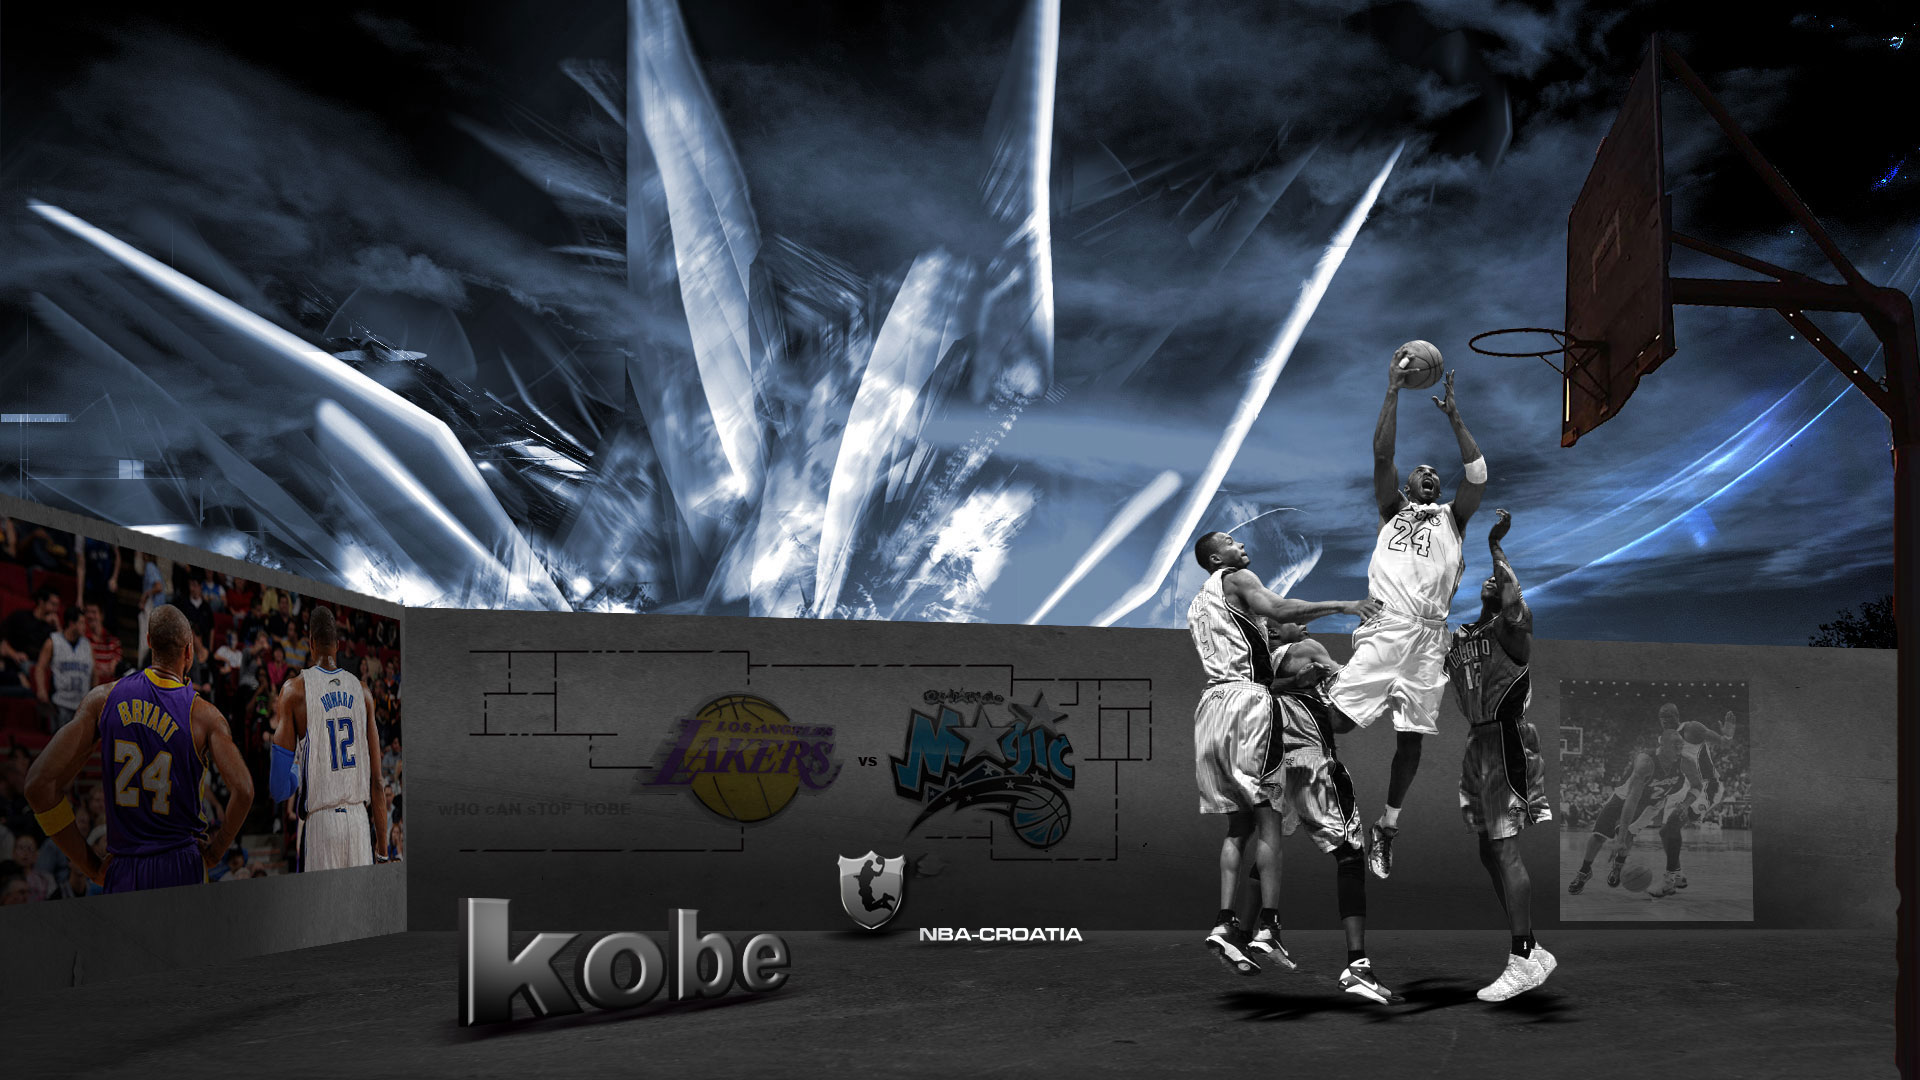 Kobe Bryant Game Winner 1.1.2010. Wallpaper  Basketball Wallpapers at